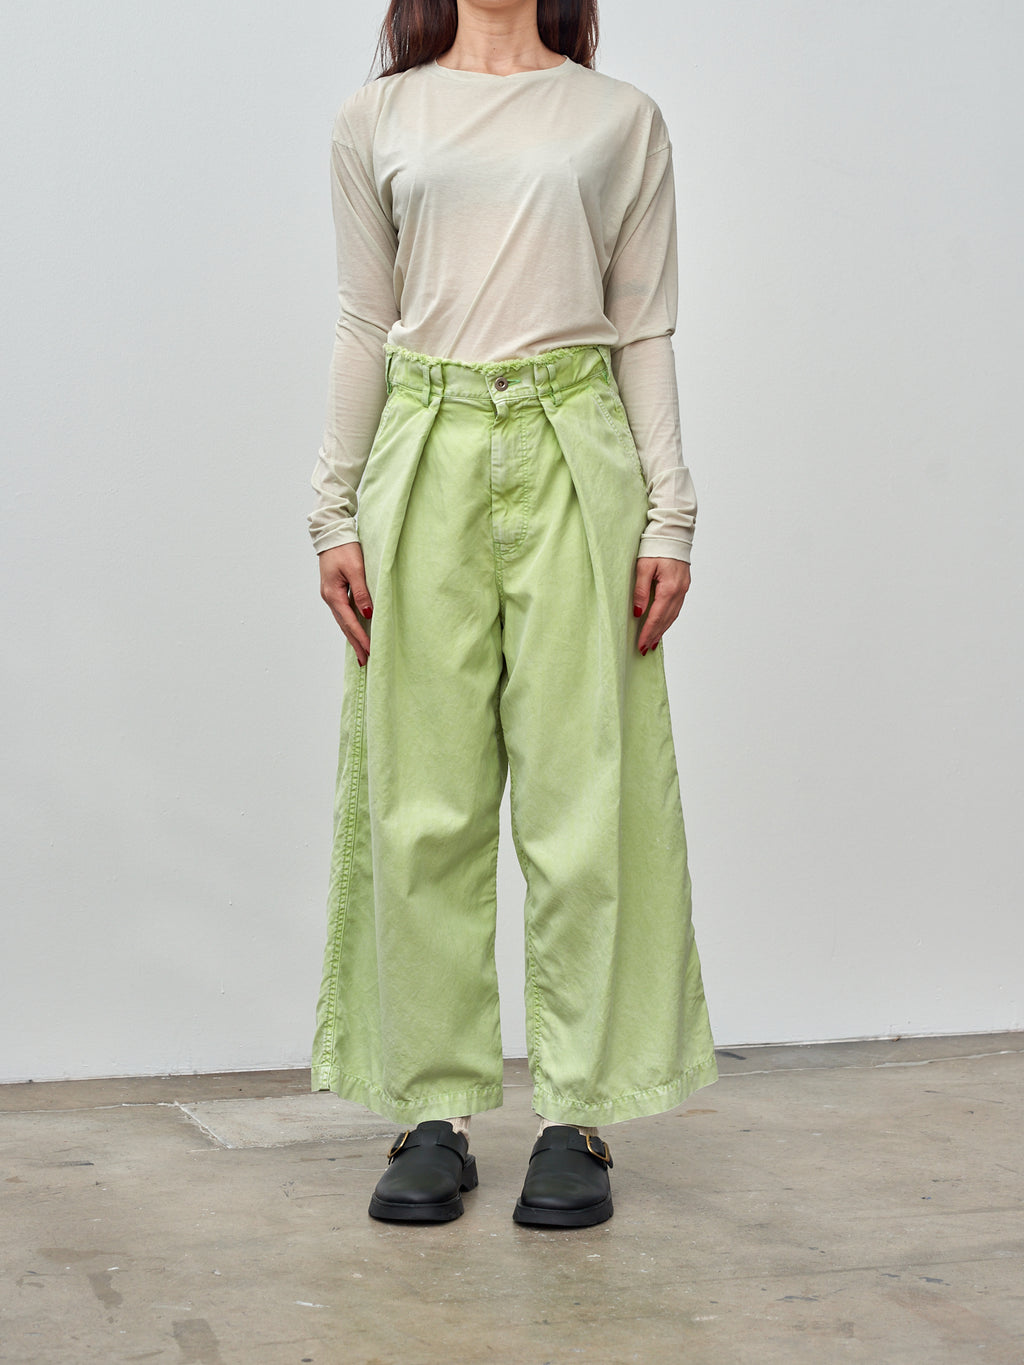 Twisted Cotton Sheer Jersey Long Sleeve Tee - Fog Green